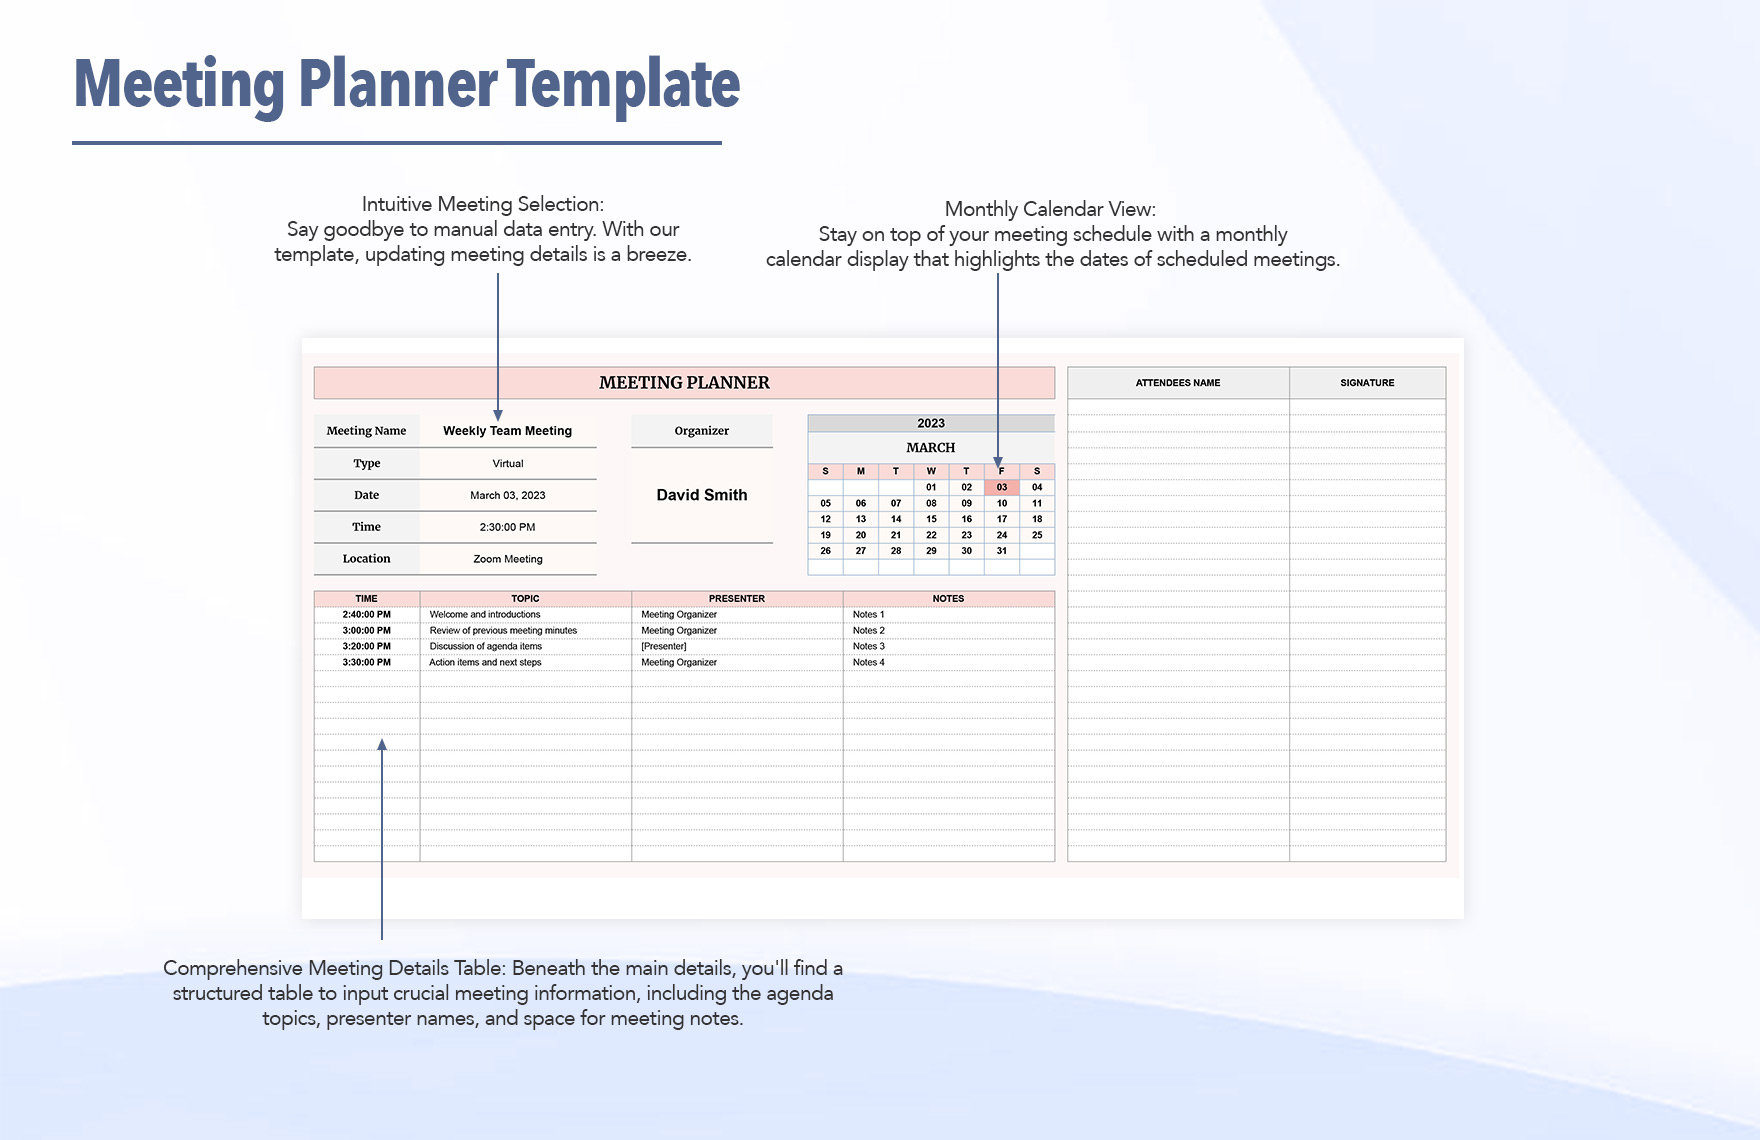 Meeting Planner Template